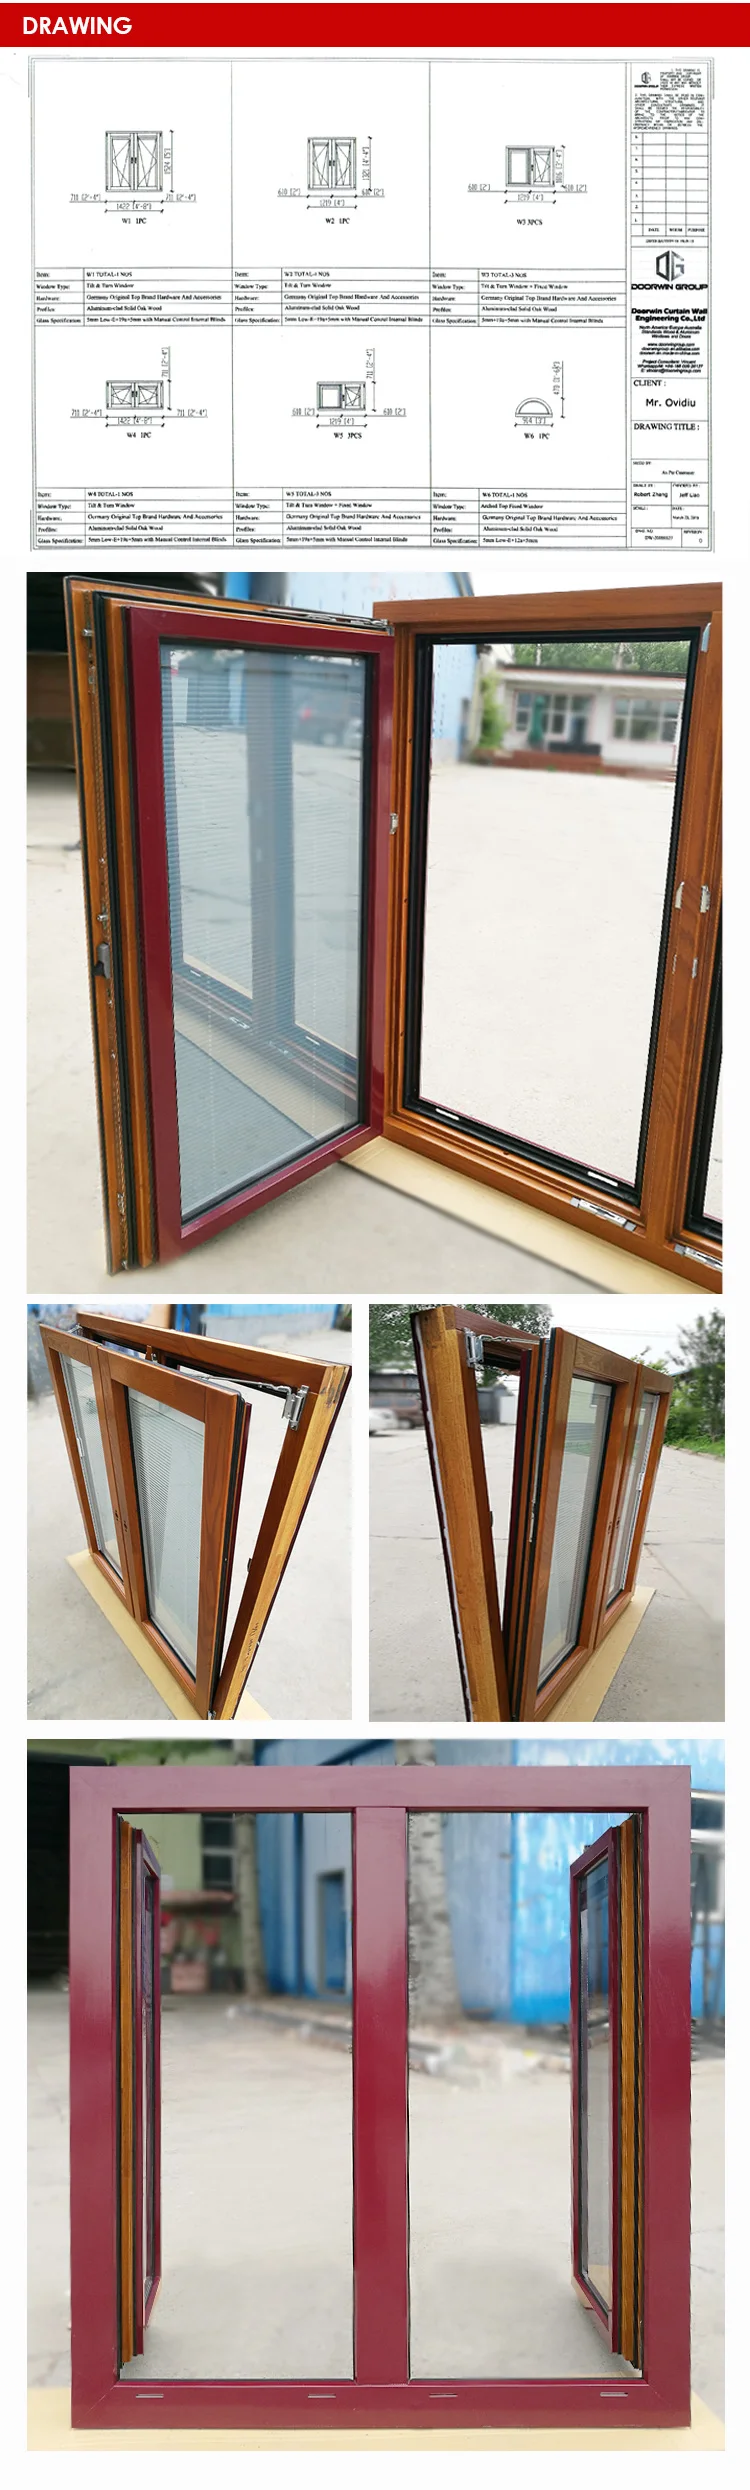 hinged grills design church profiles aluminium framed double glass nigeria french casement windows